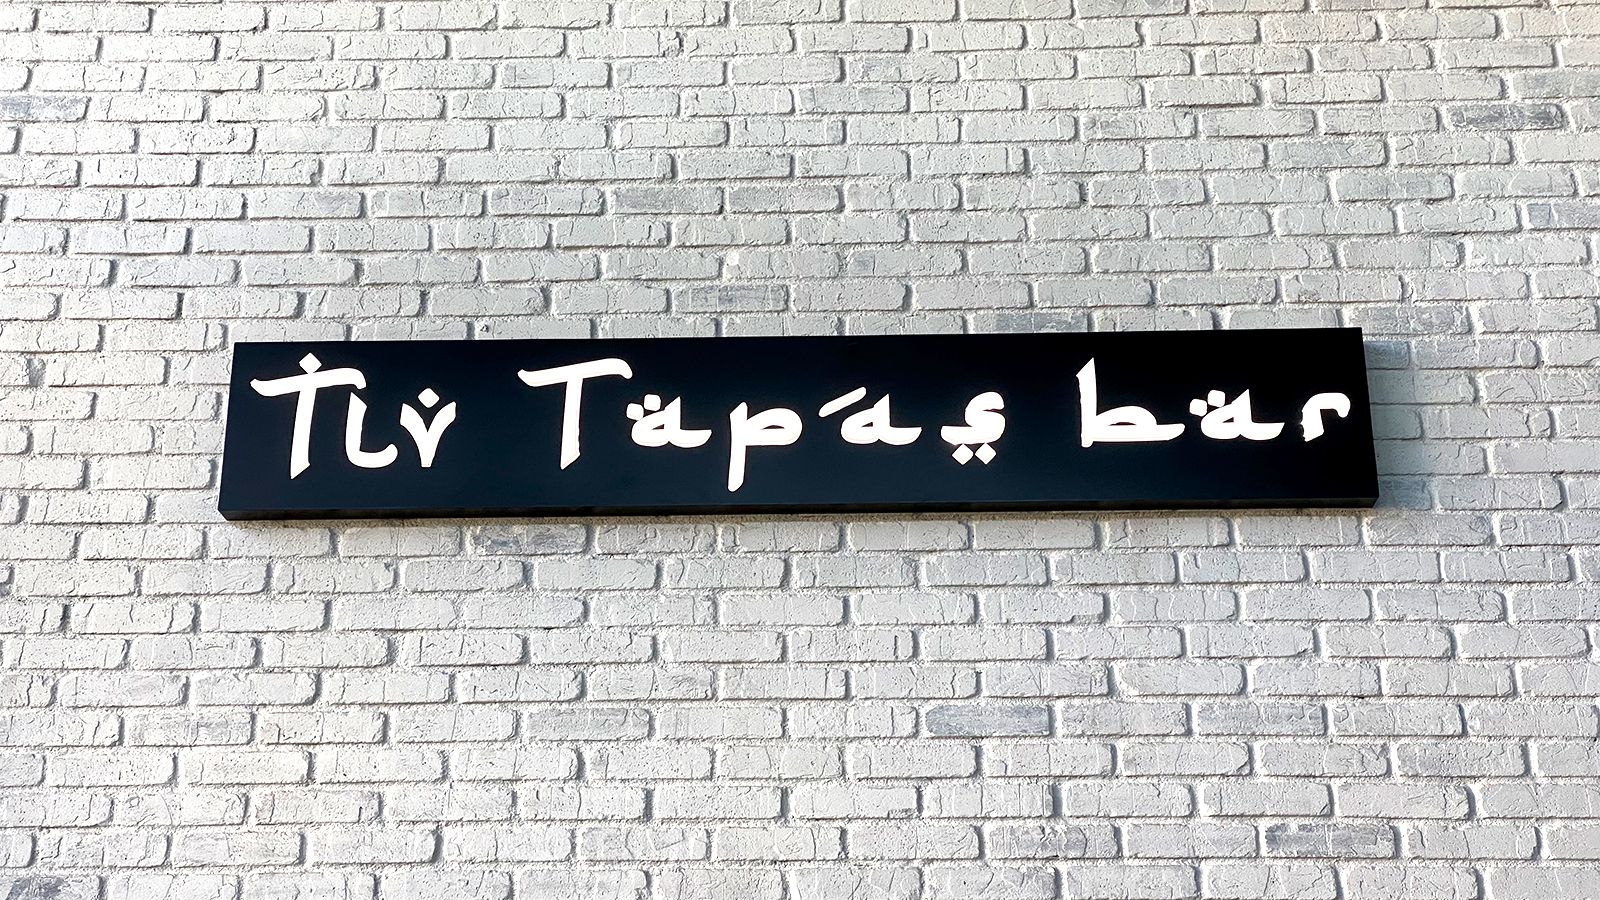 Tly tapas bar restaurant sign